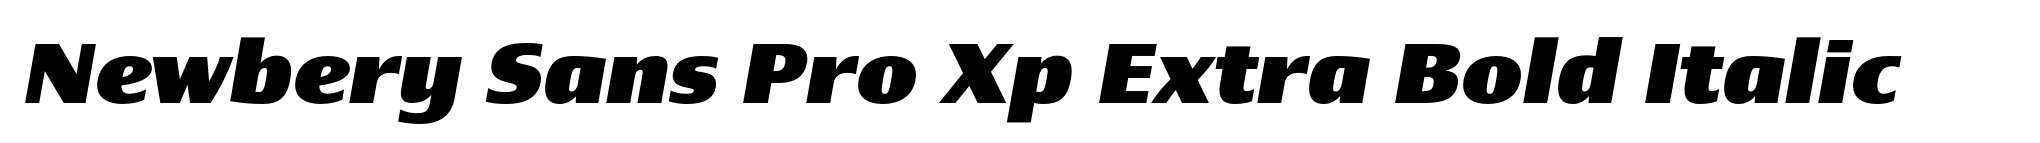 Newbery Sans Pro Xp Extra Bold Italic image